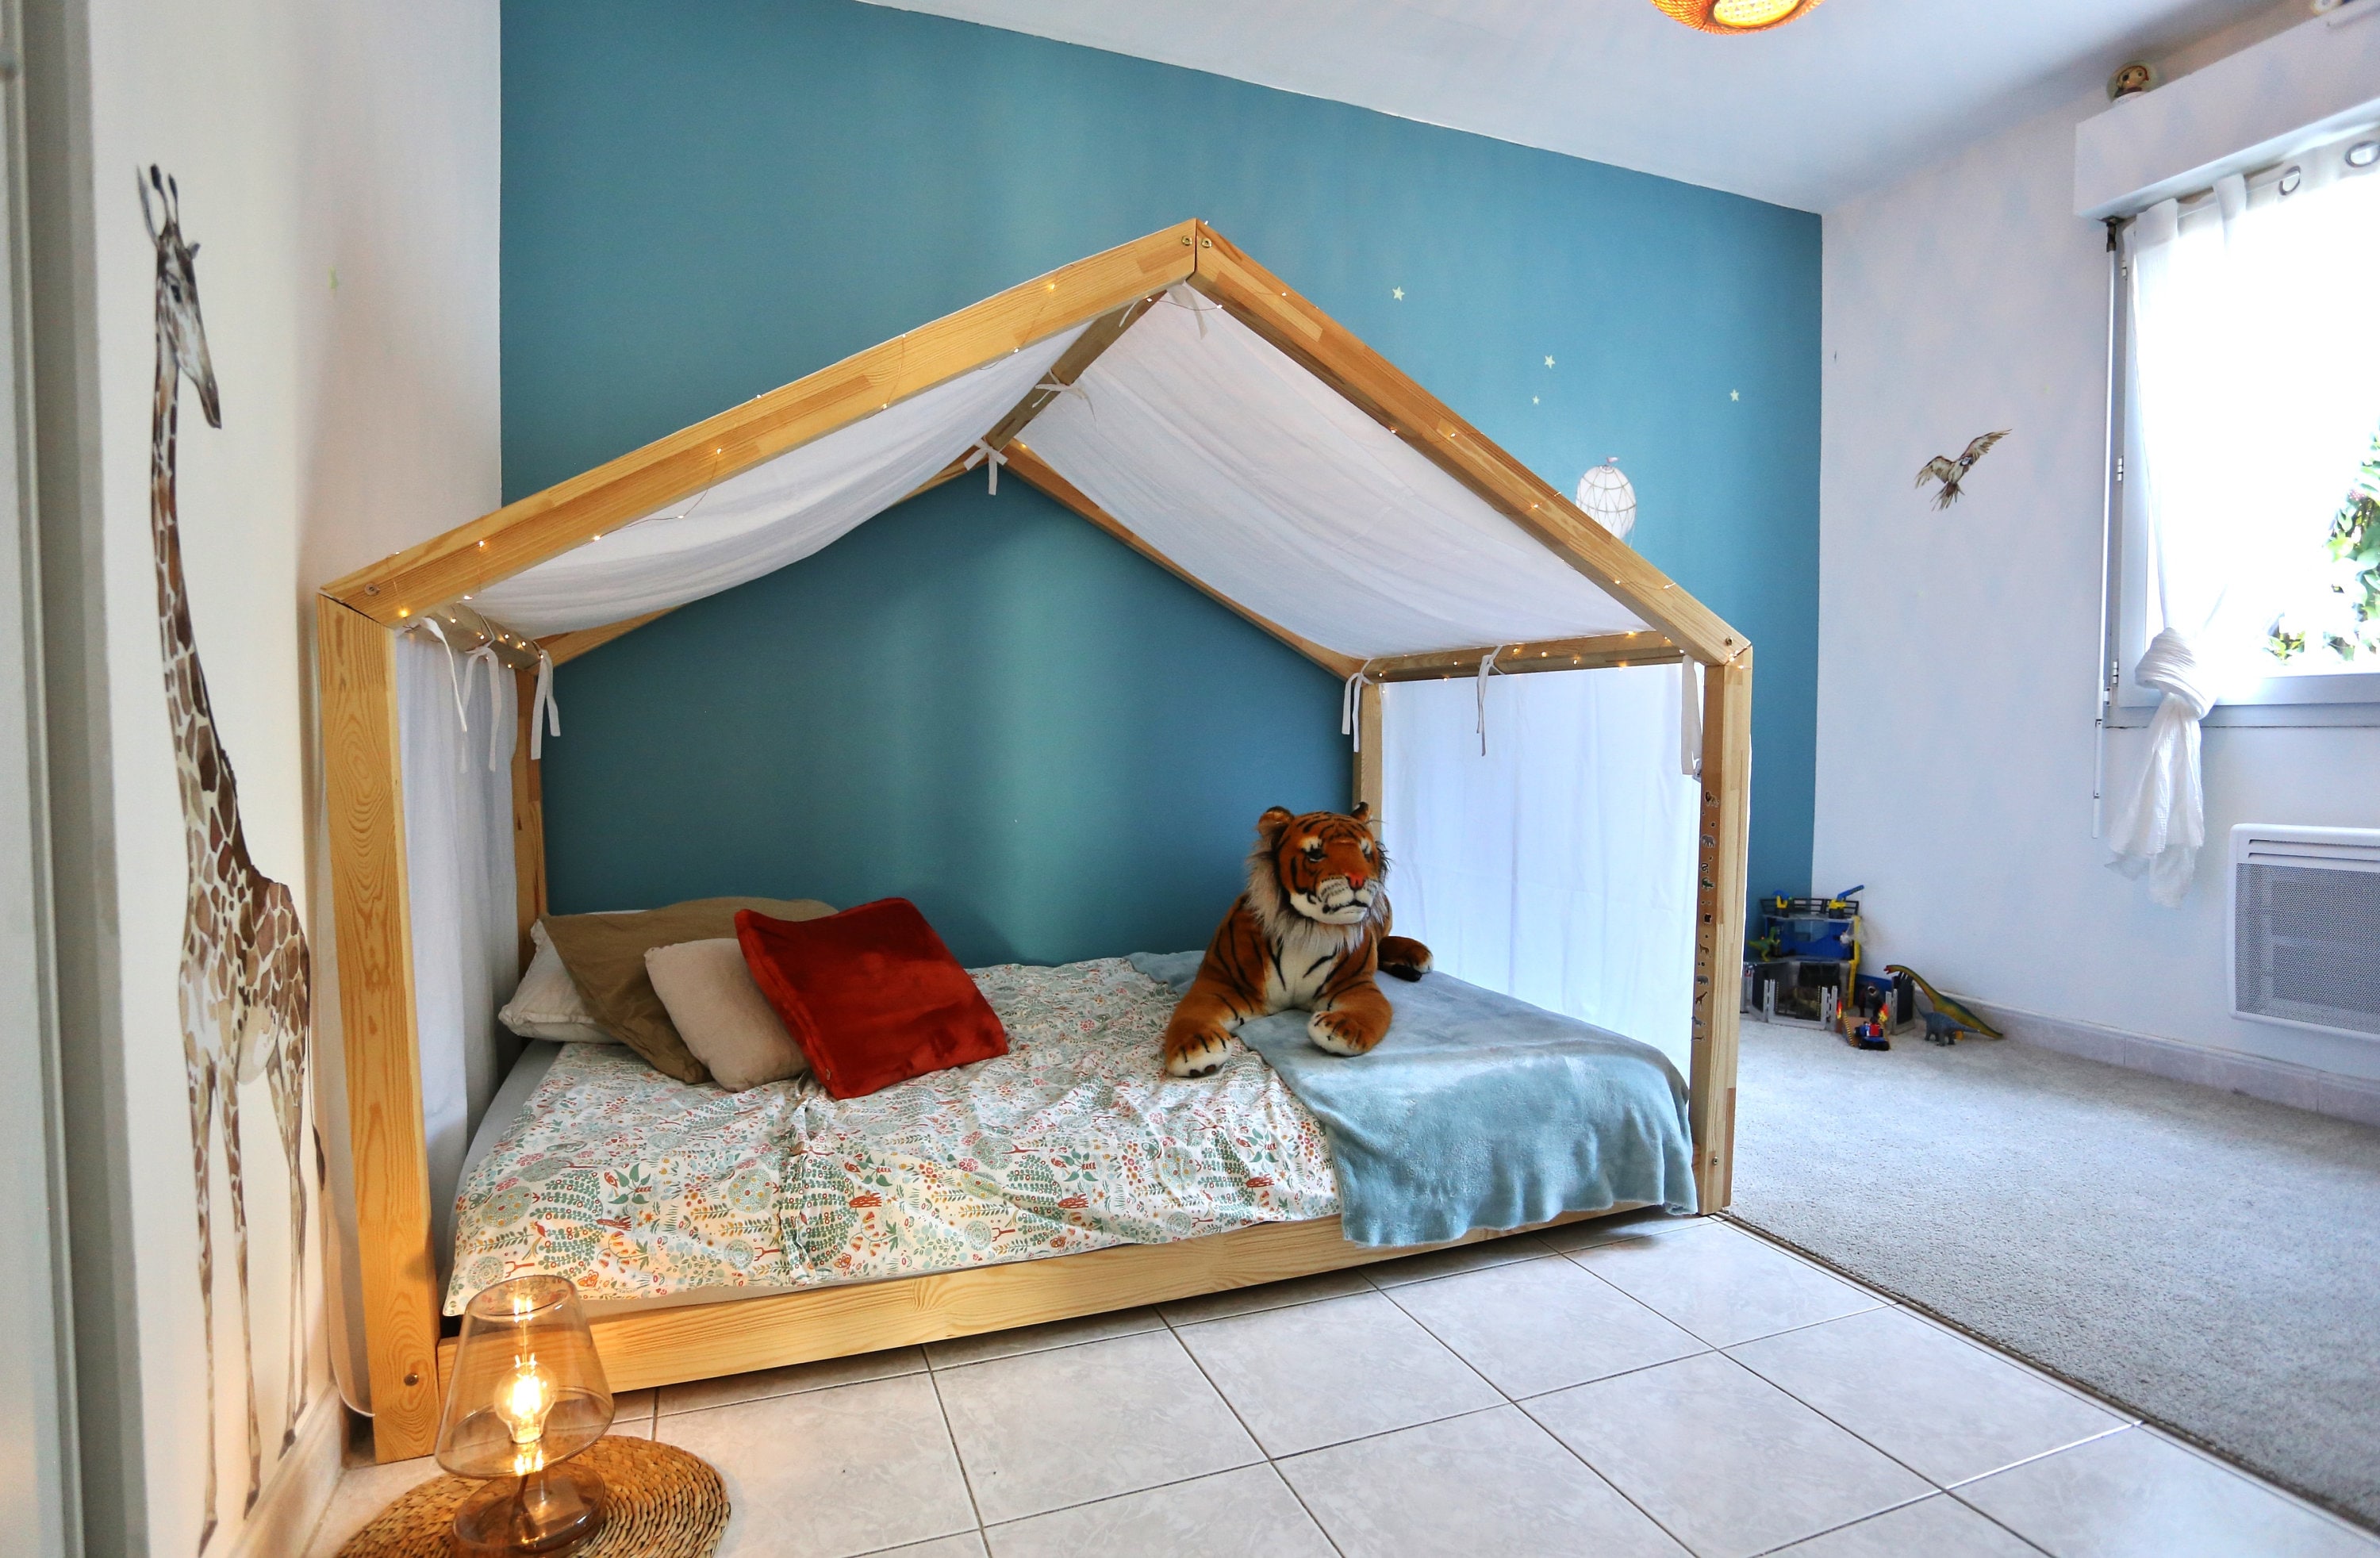 KURA Tente pour lit, espace/bleu - IKEA